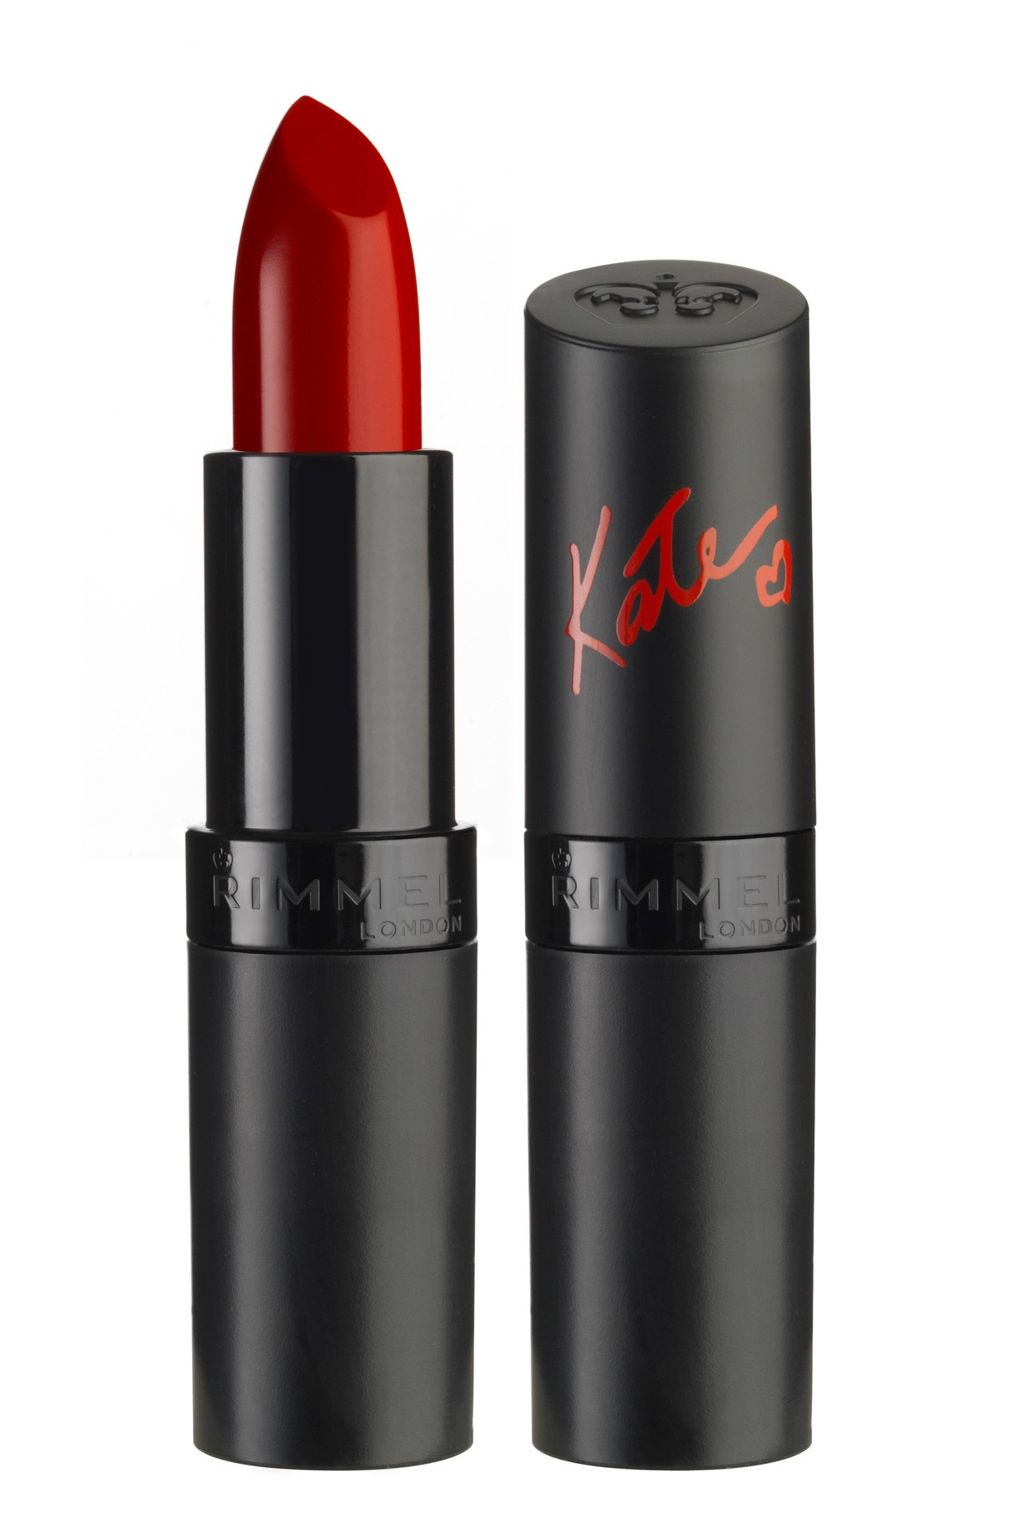 festive red lipsticks